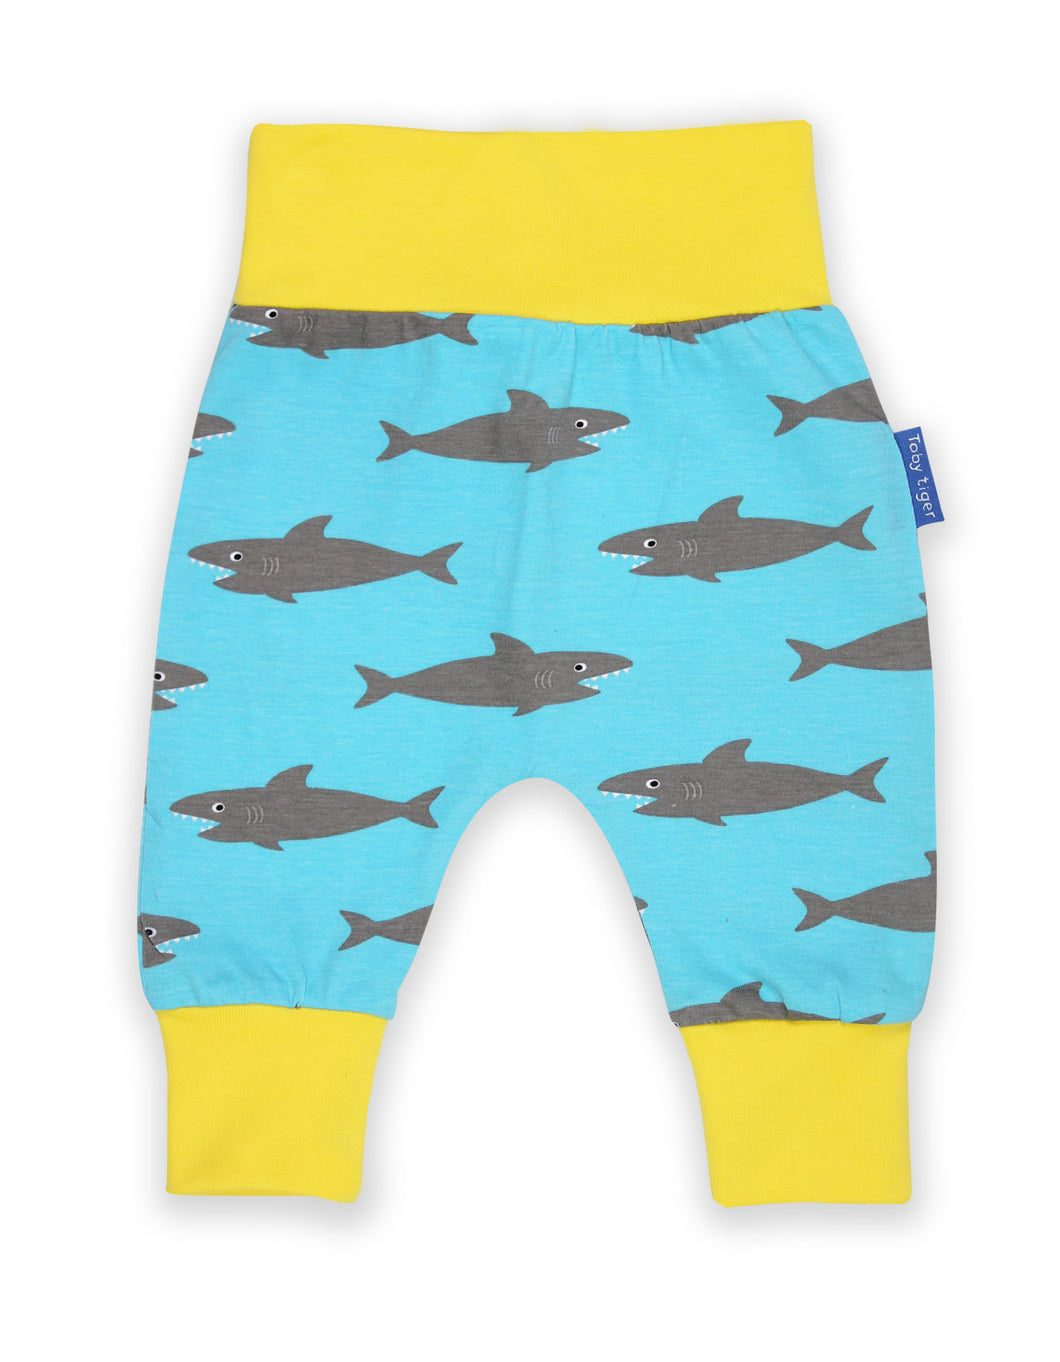 Shark Print Yoga Pants